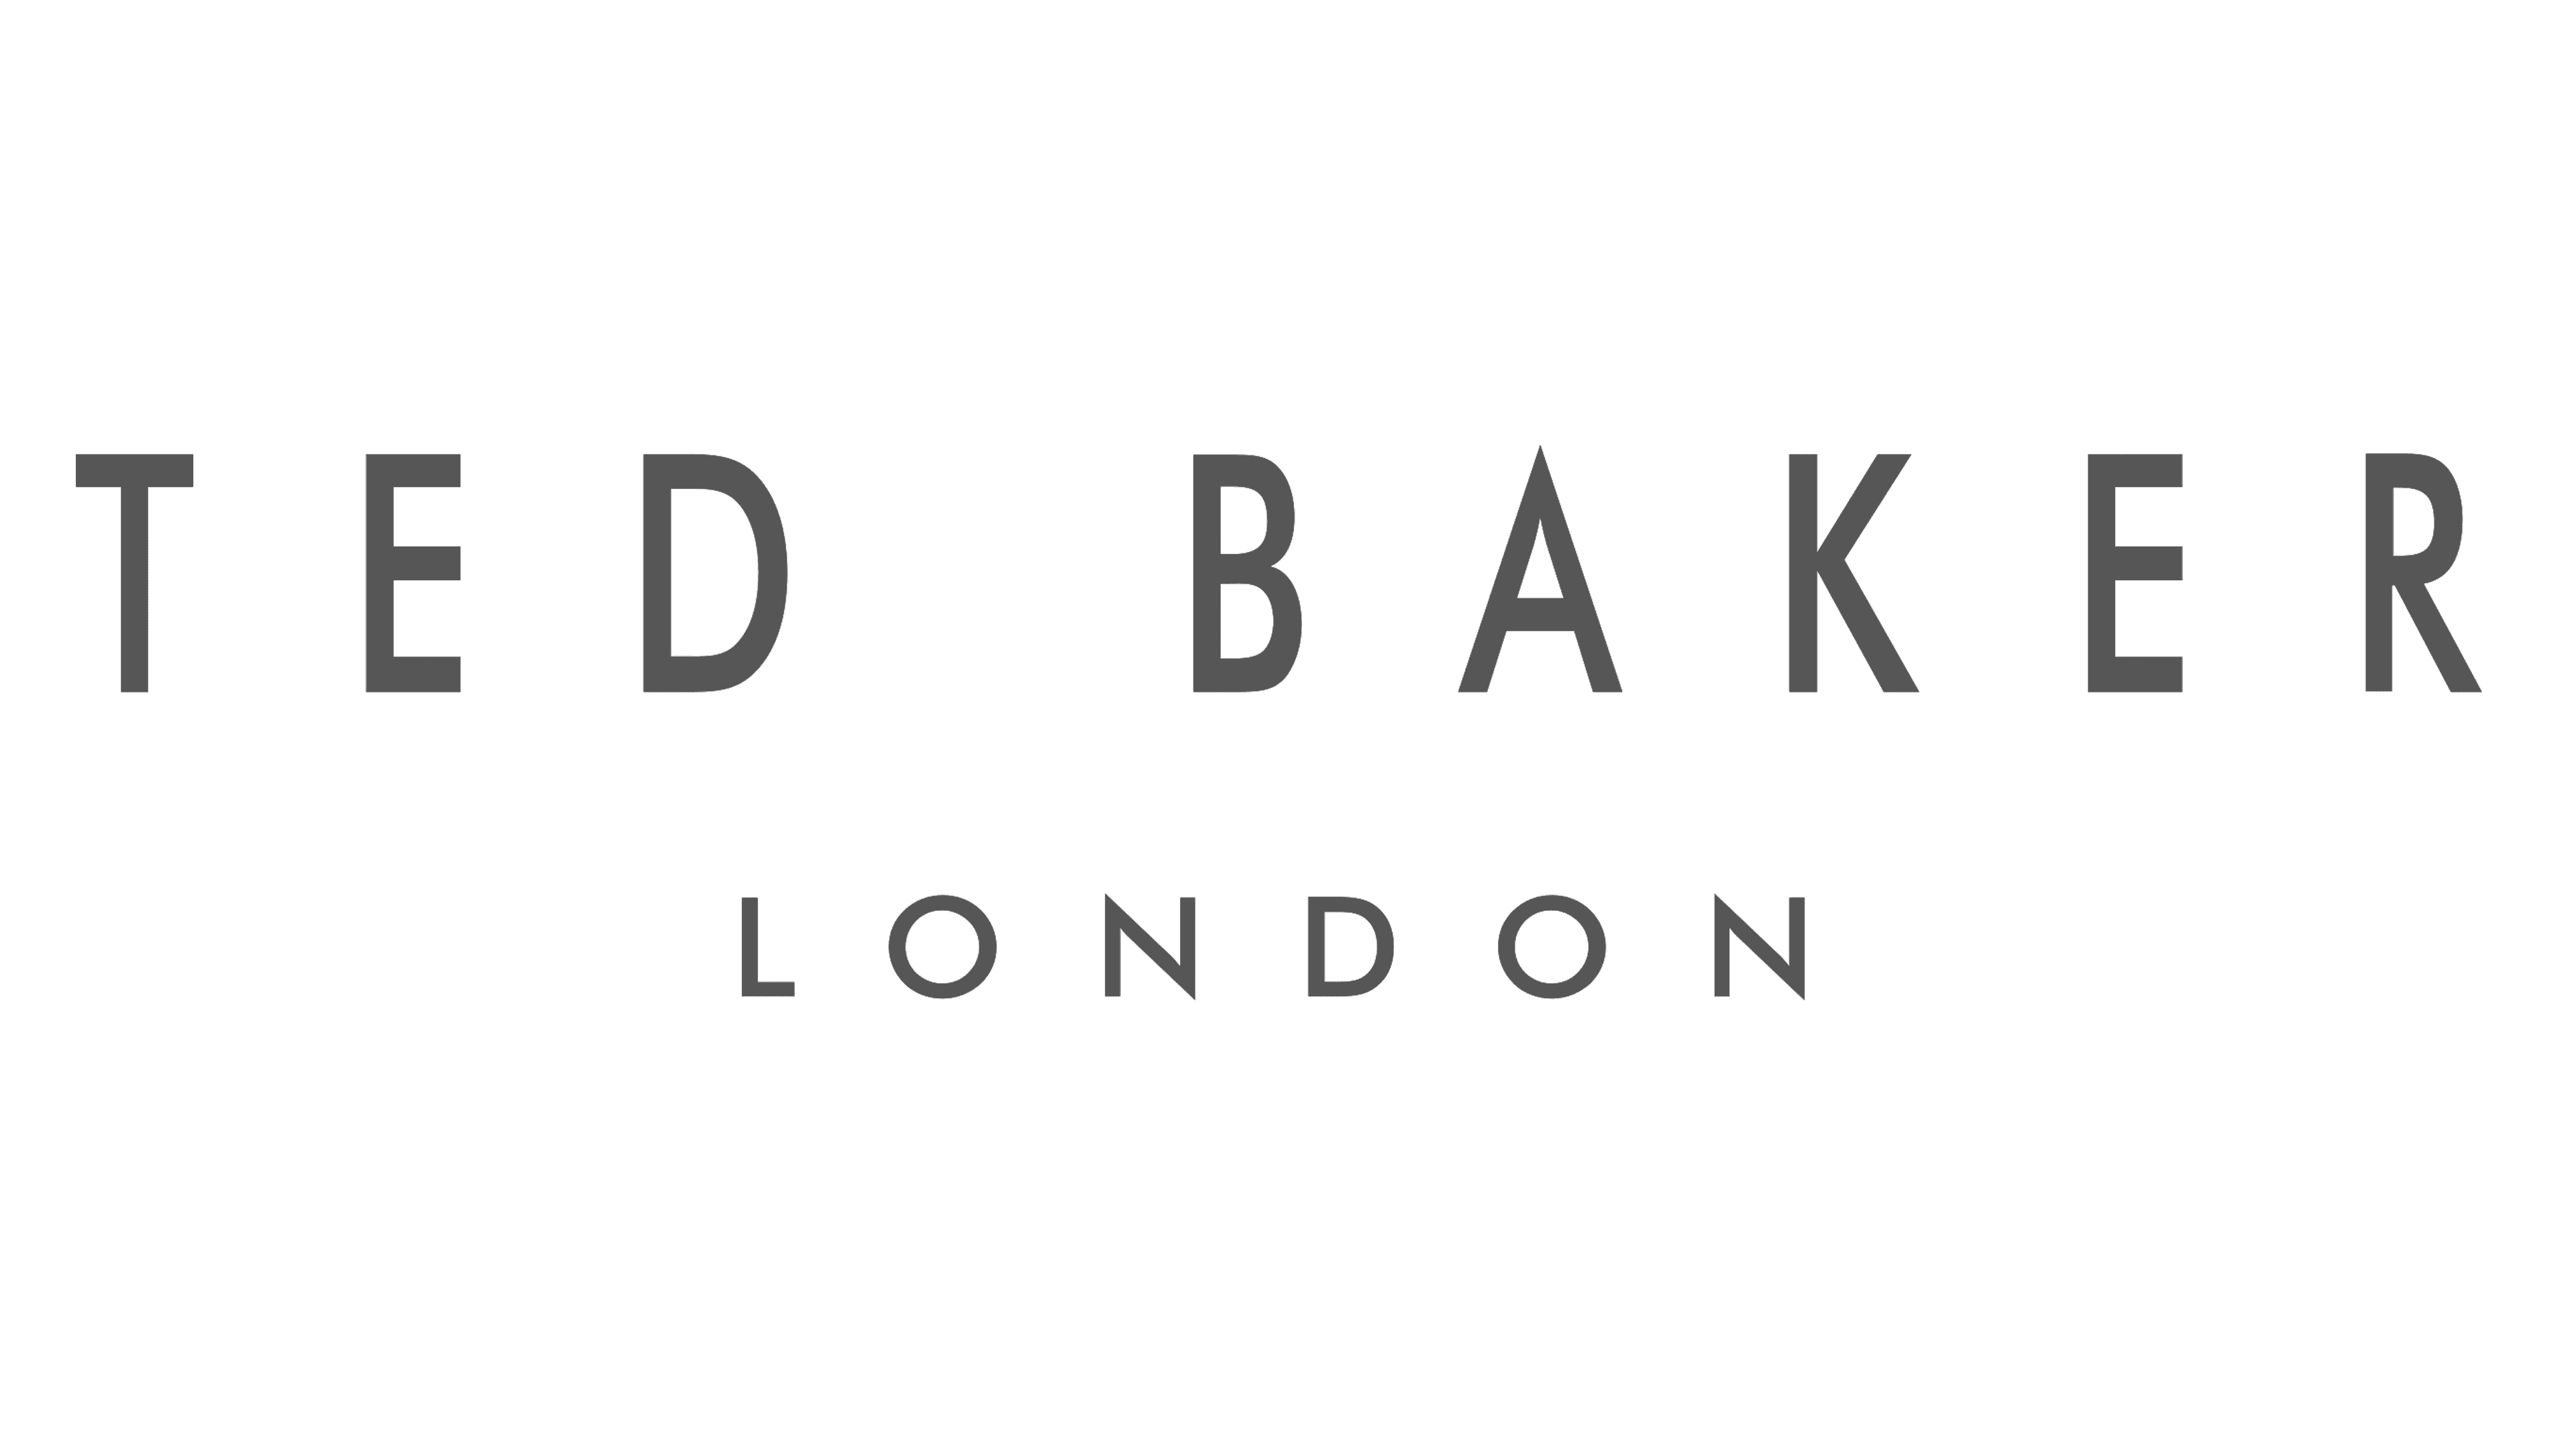 https://1000logos.net/wp-content/uploads/2021/06/Ted-Baker-London-logo.png